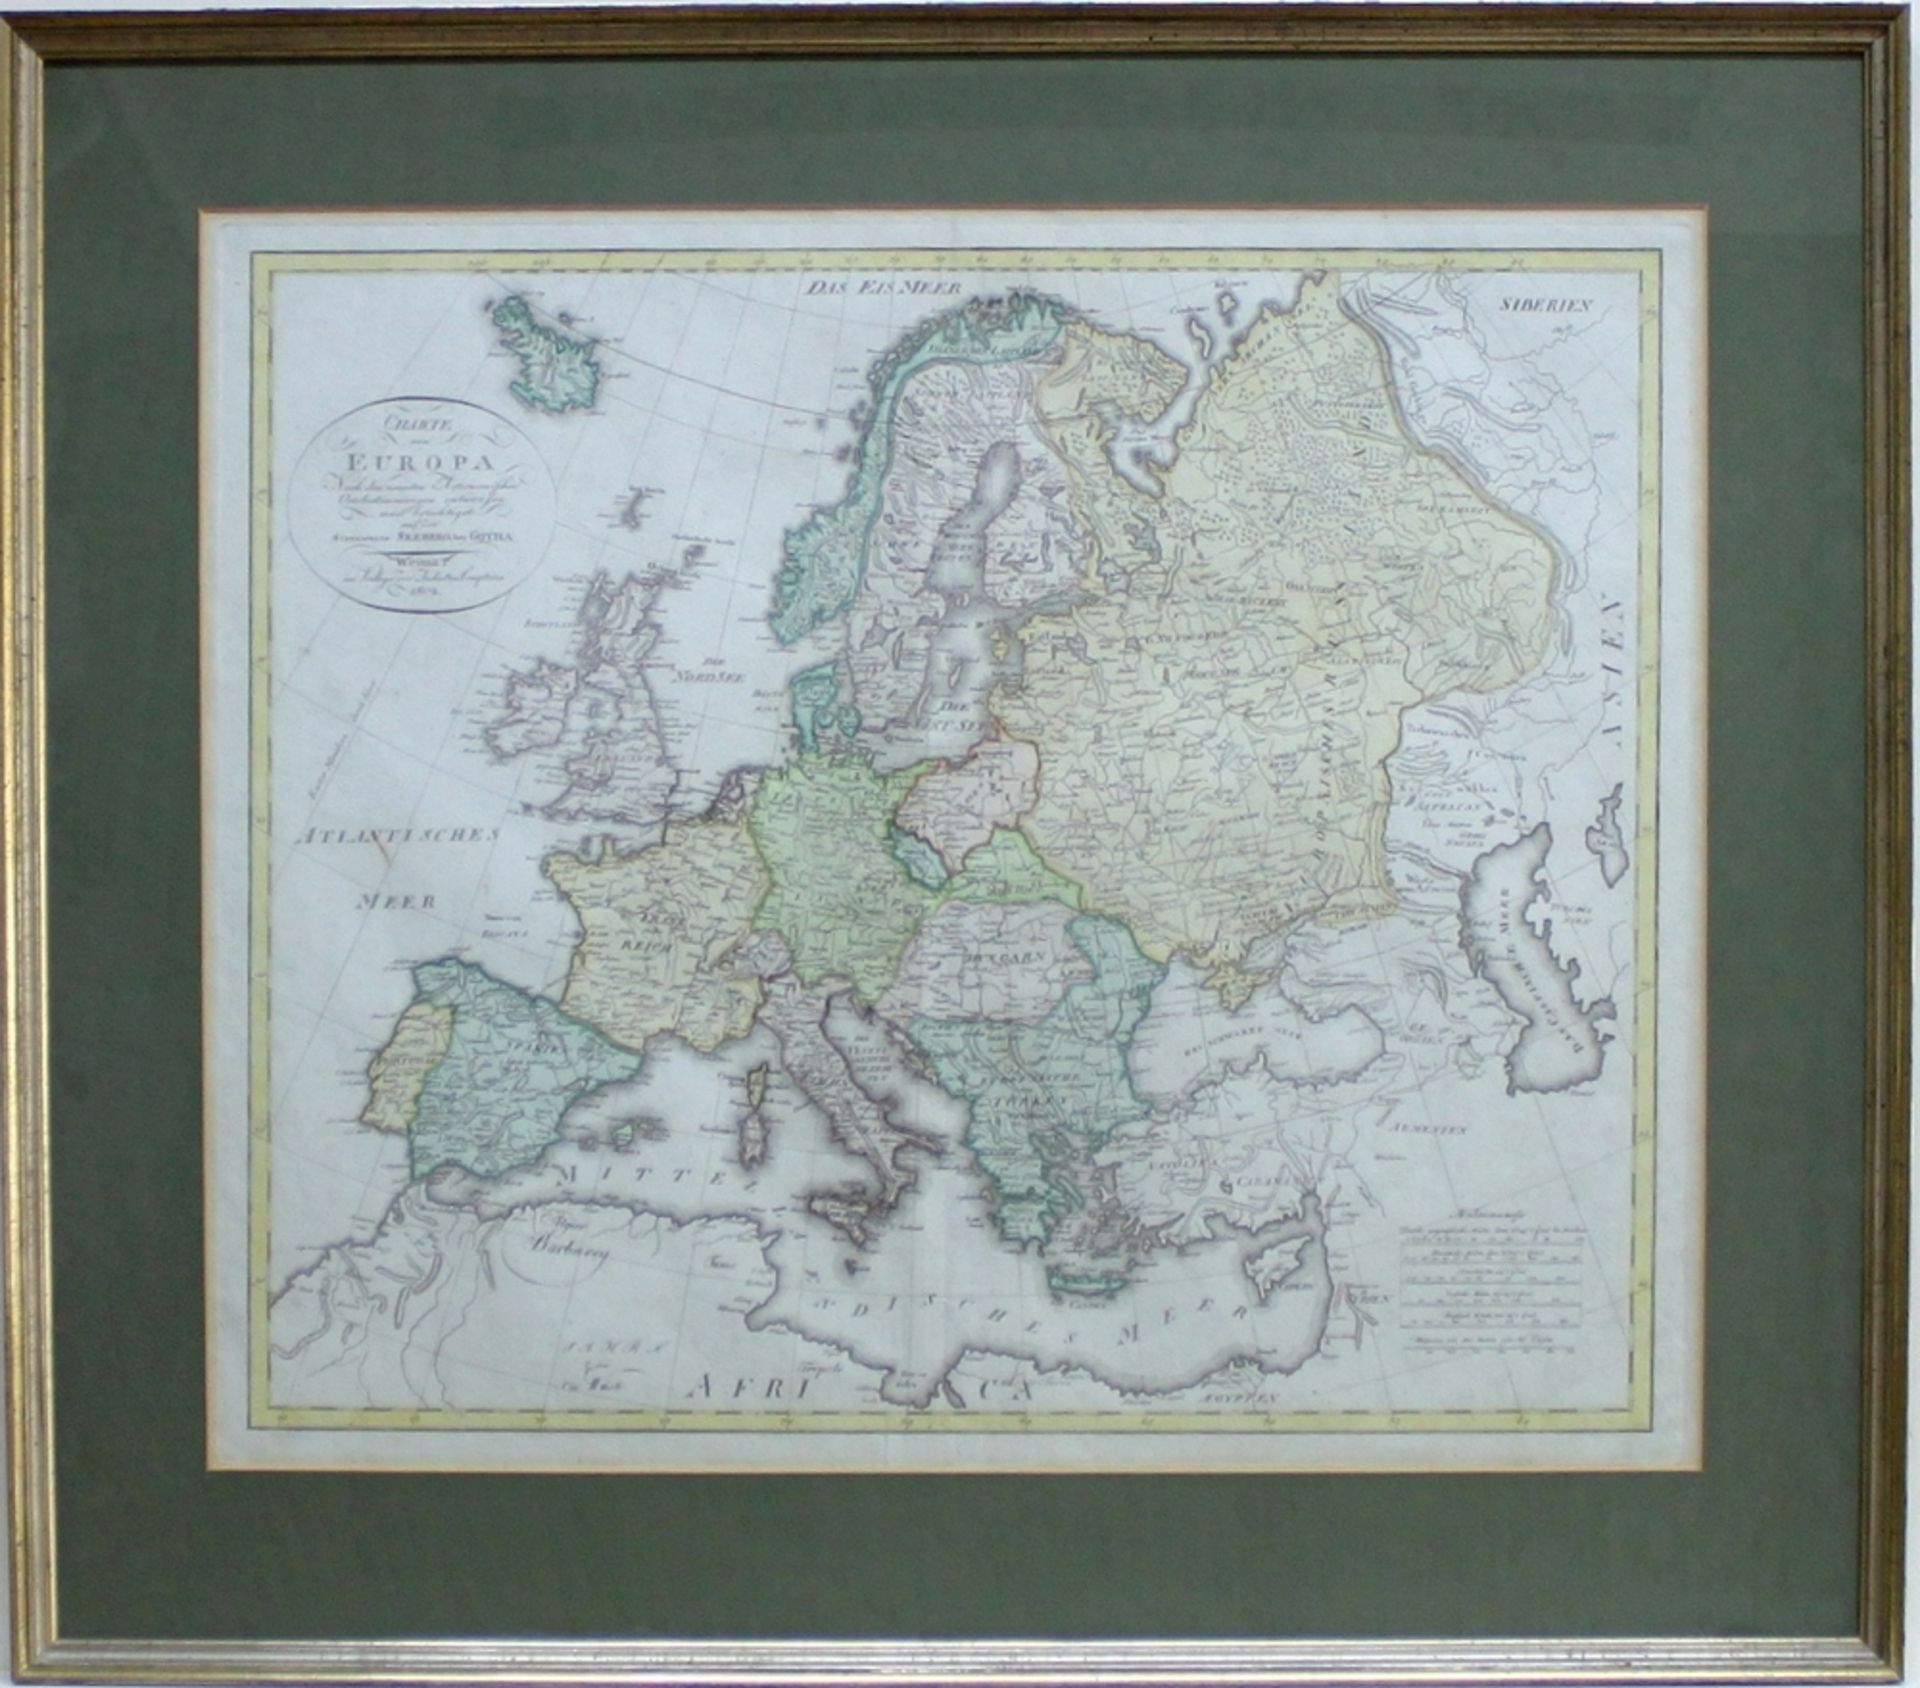 Landkarten. Europa - Karte. Kolorierte Kupferstichkarte. Weimar, Industrie Comptoir, 1802. Bildgröße